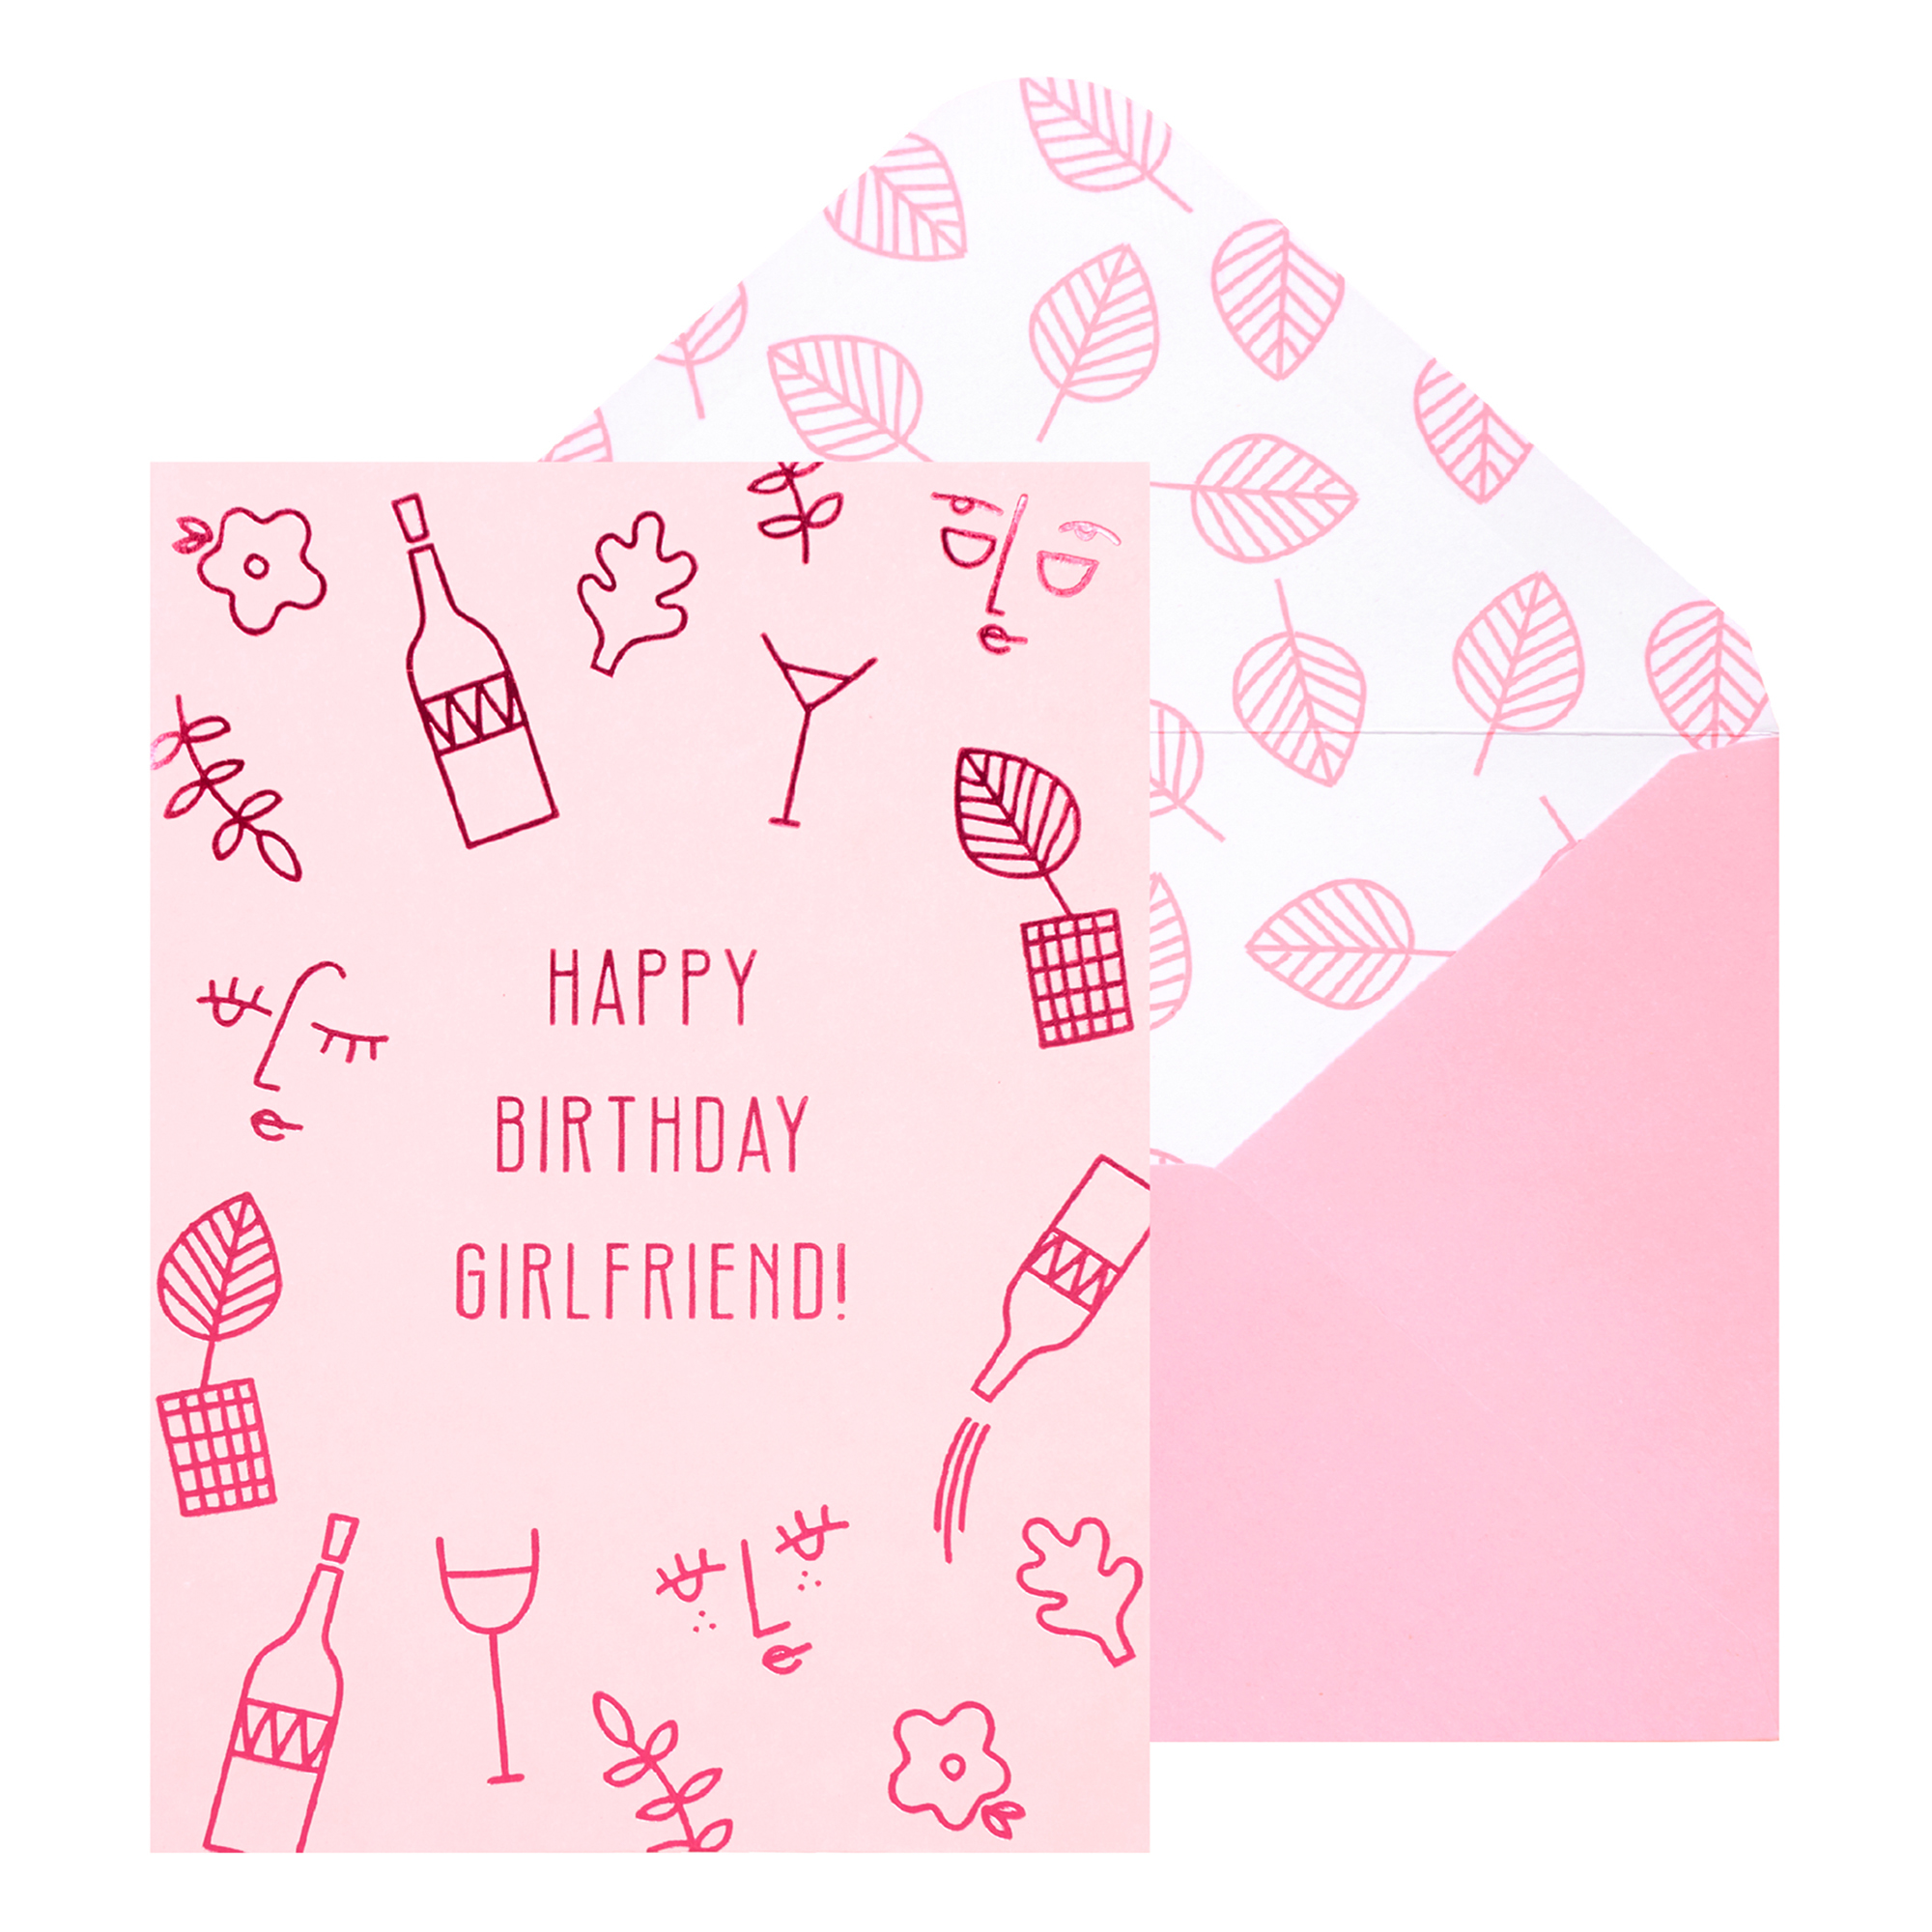 Cute Birthday Card Ideas For Girlfriend A6 Greeting Card Happy Birthday Girlfriend Pink